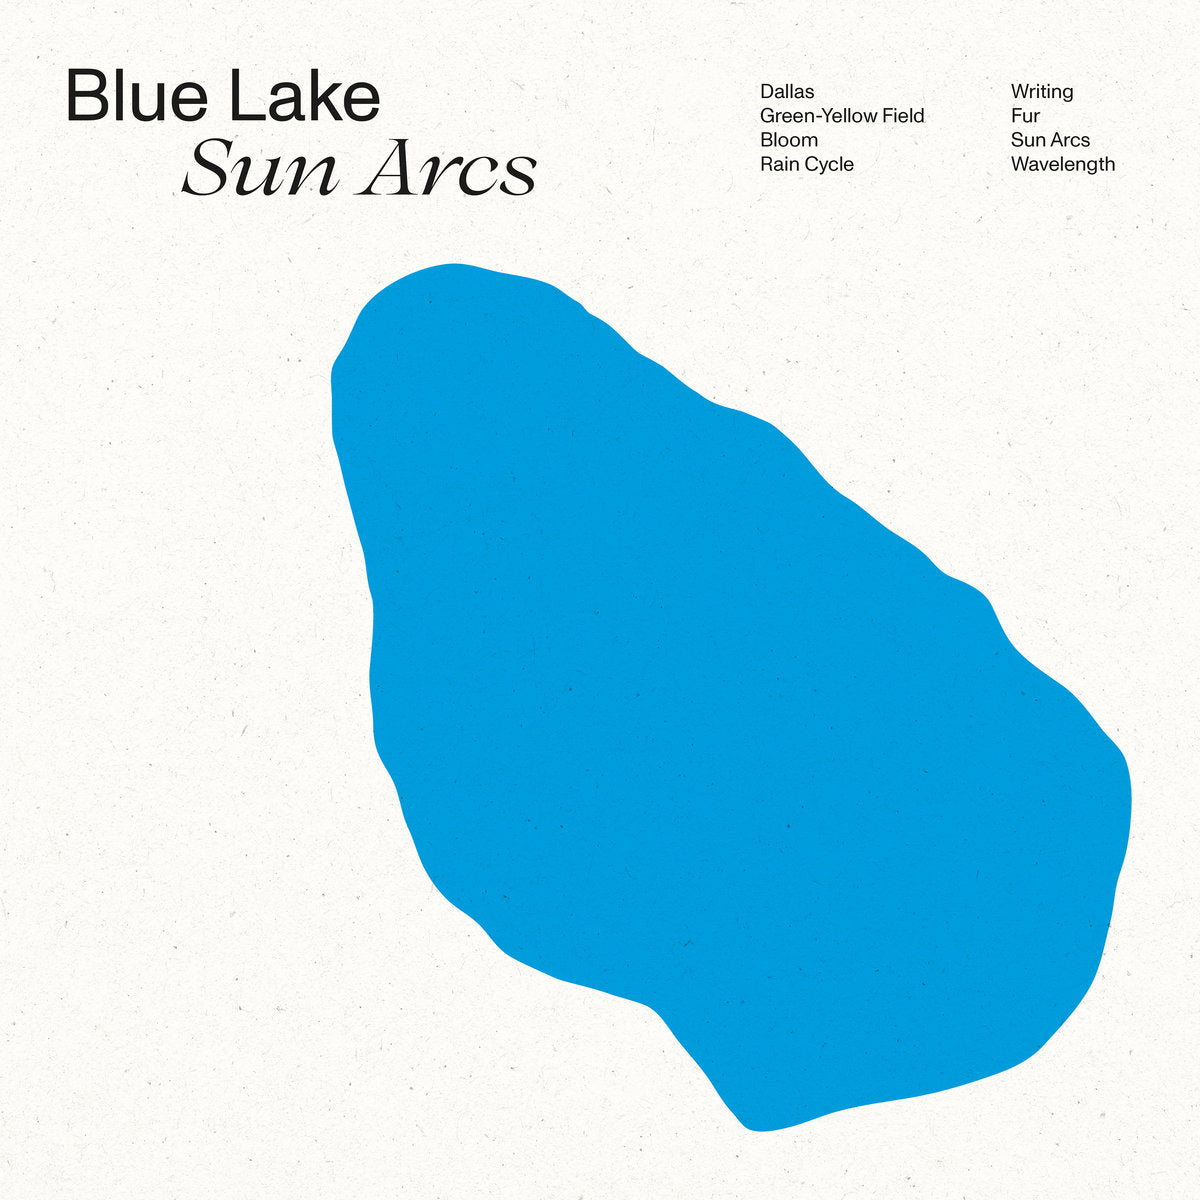 Blue Lake – Sun Arcs